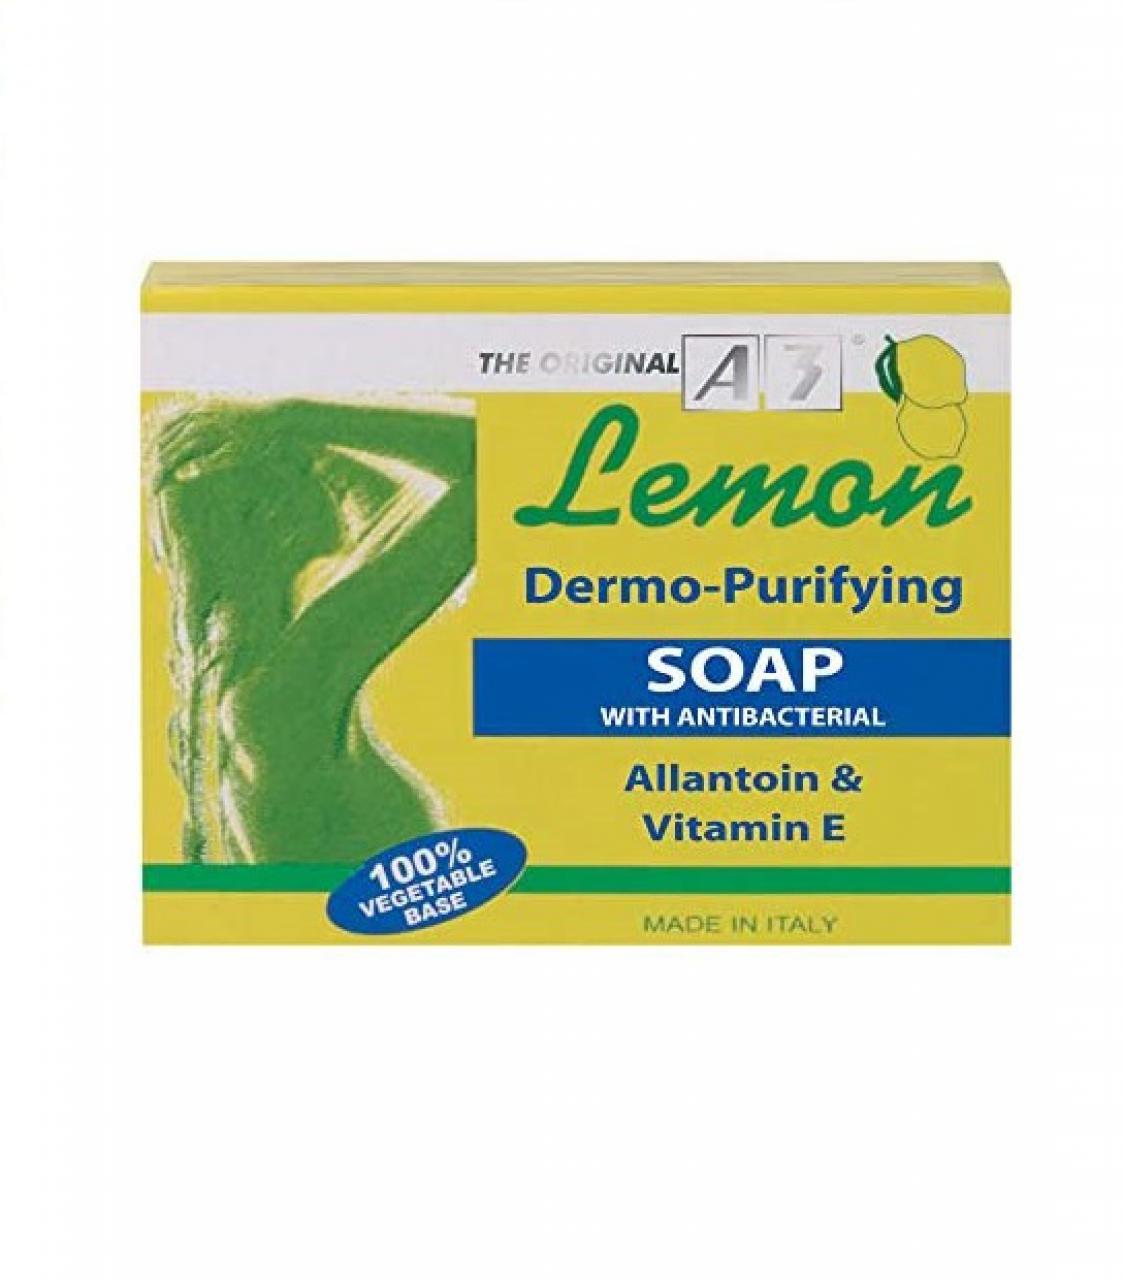 Lemon dermo-purifying